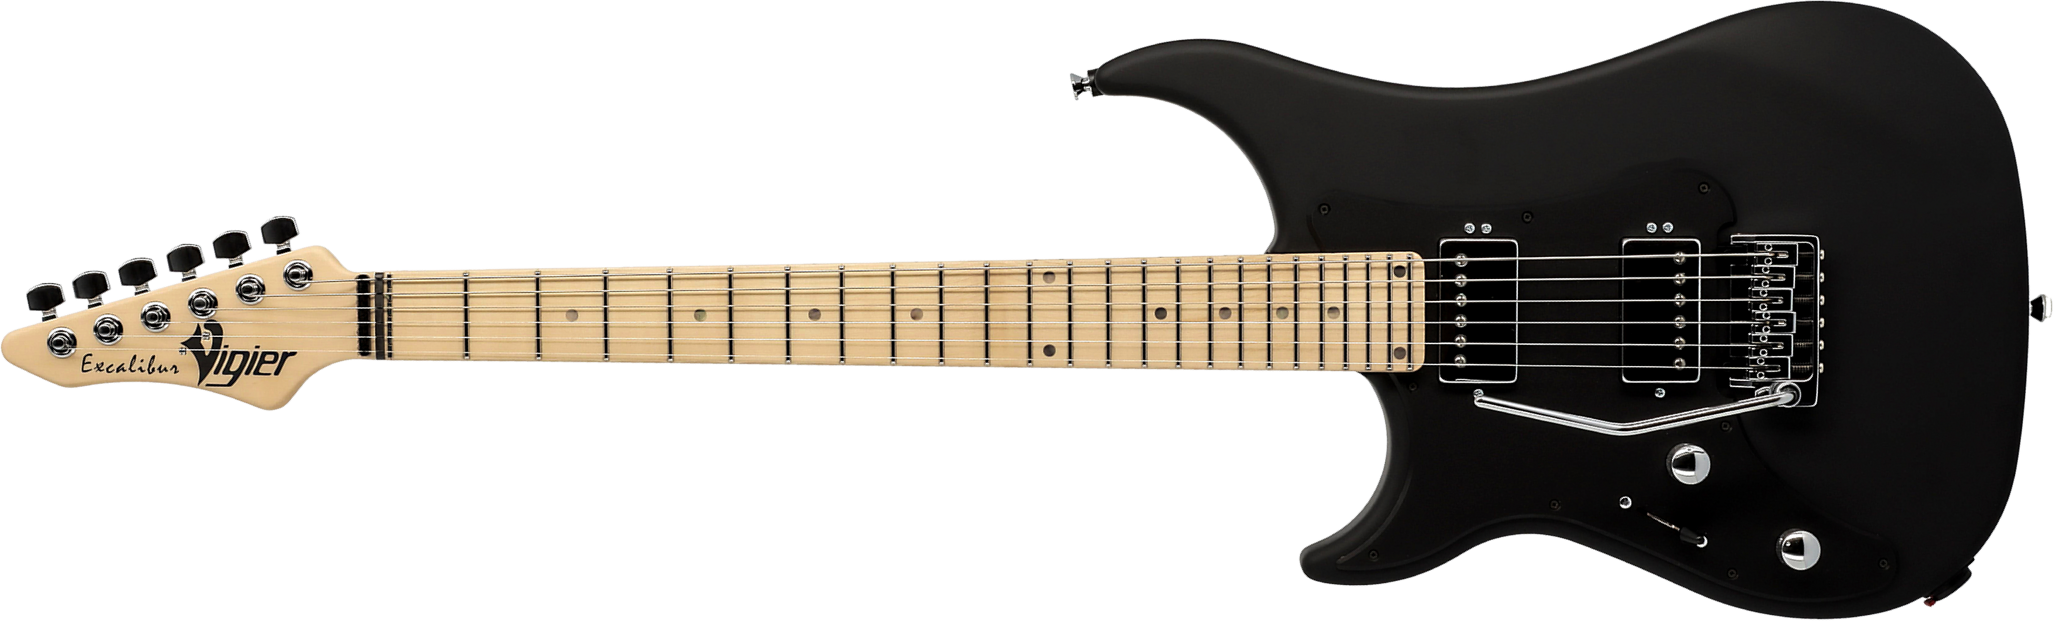 Vigier Excalibur Indus Lh Gaucher 2h Trem Mn - Textured Black - Left-handed electric guitar - Main picture